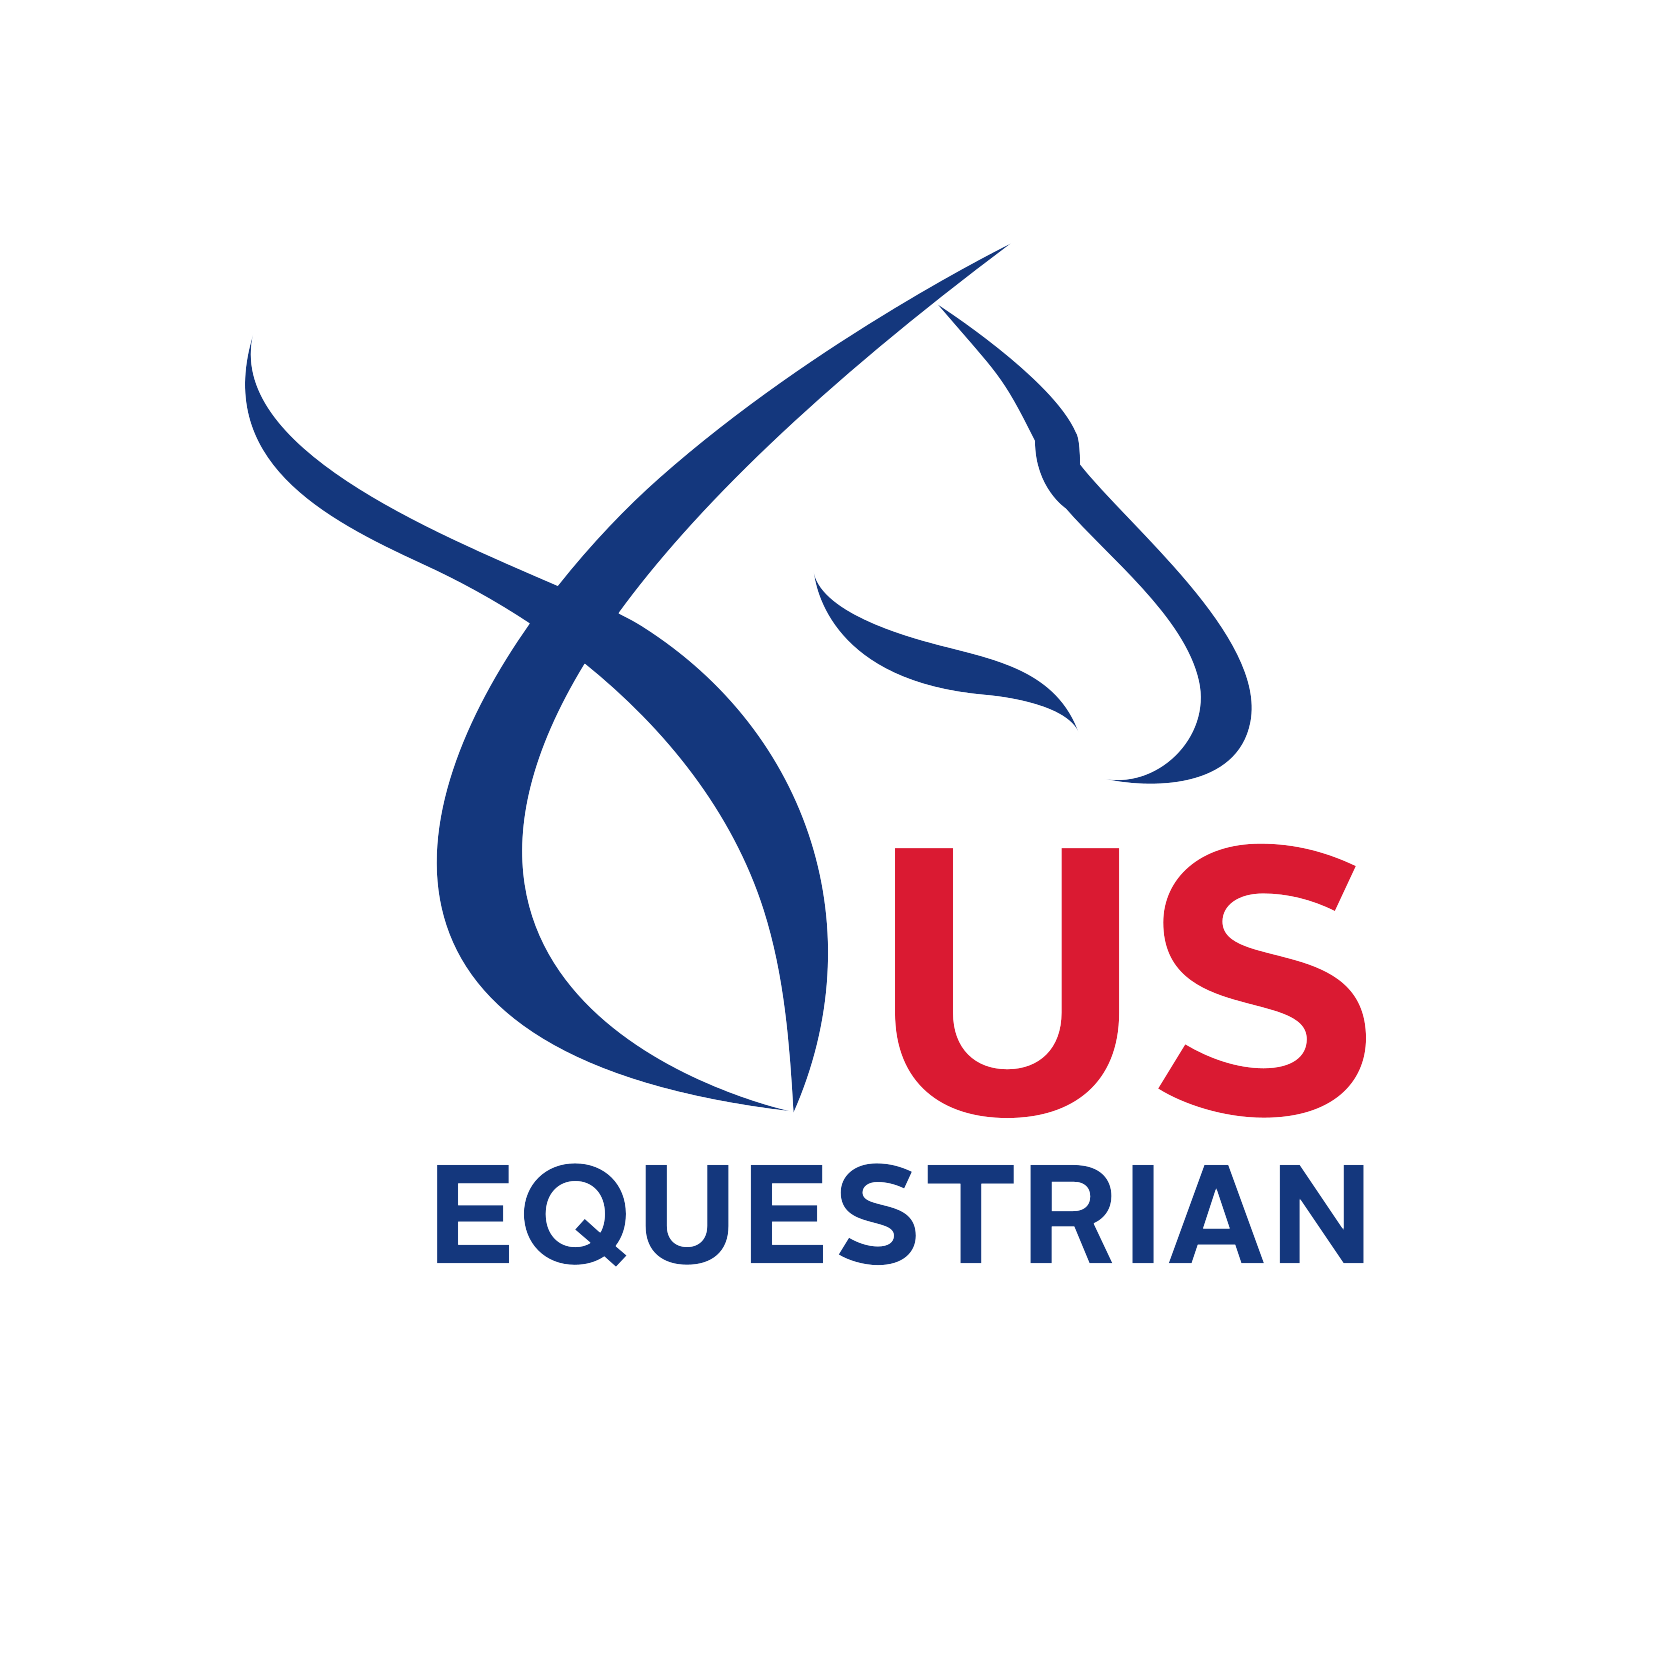 US Equestrian | Organizational Profile, Work & Jobs